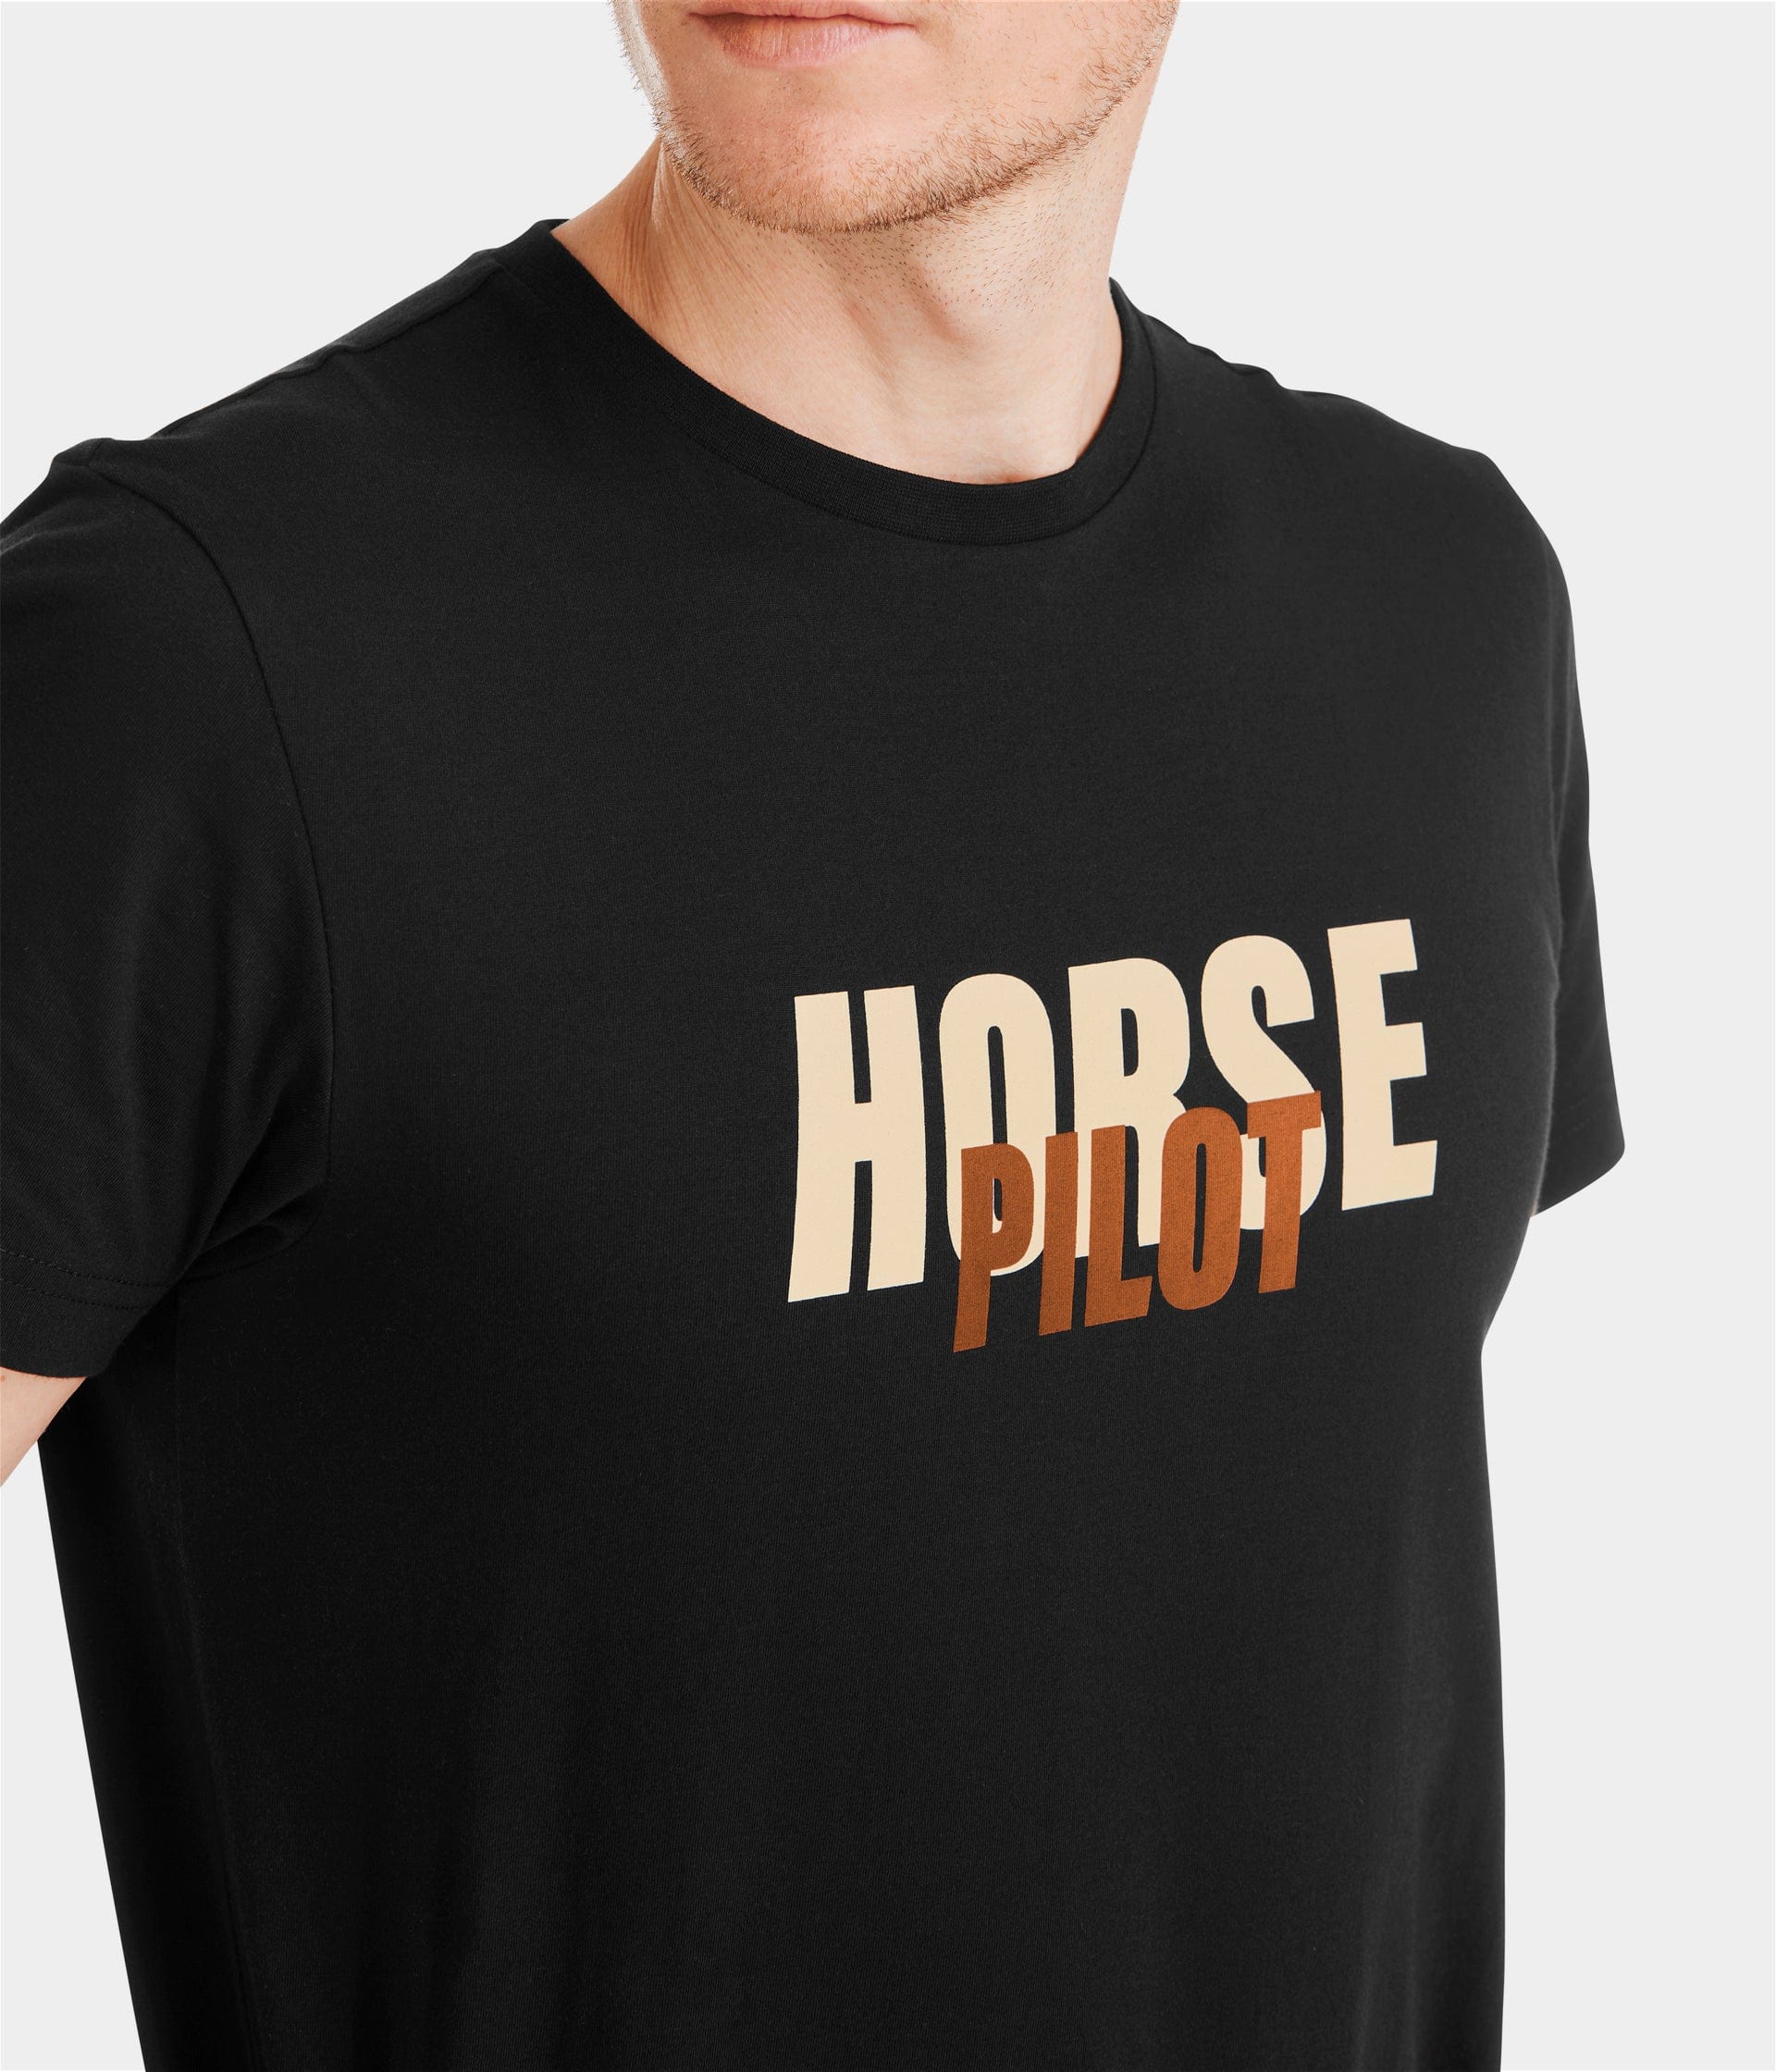 Horse Pilot Mens Team Shirt - Black